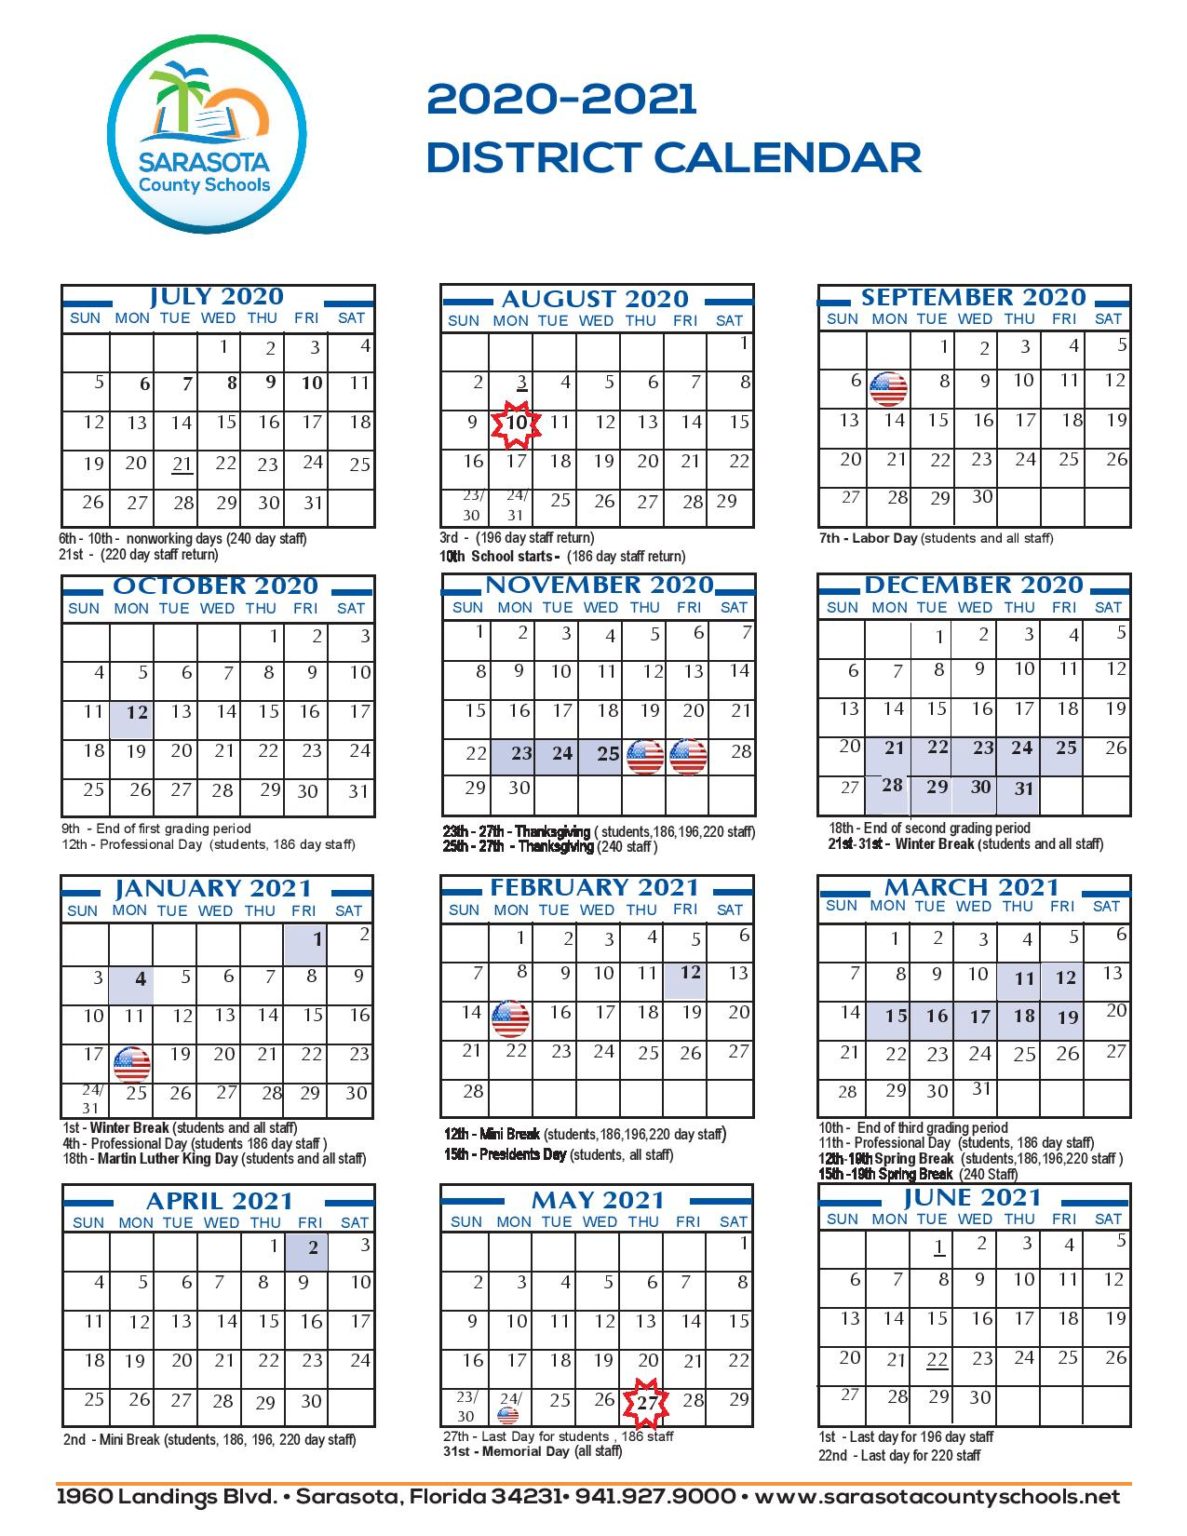 Sarasota County School Calendar 2020-2021 in PDF Format